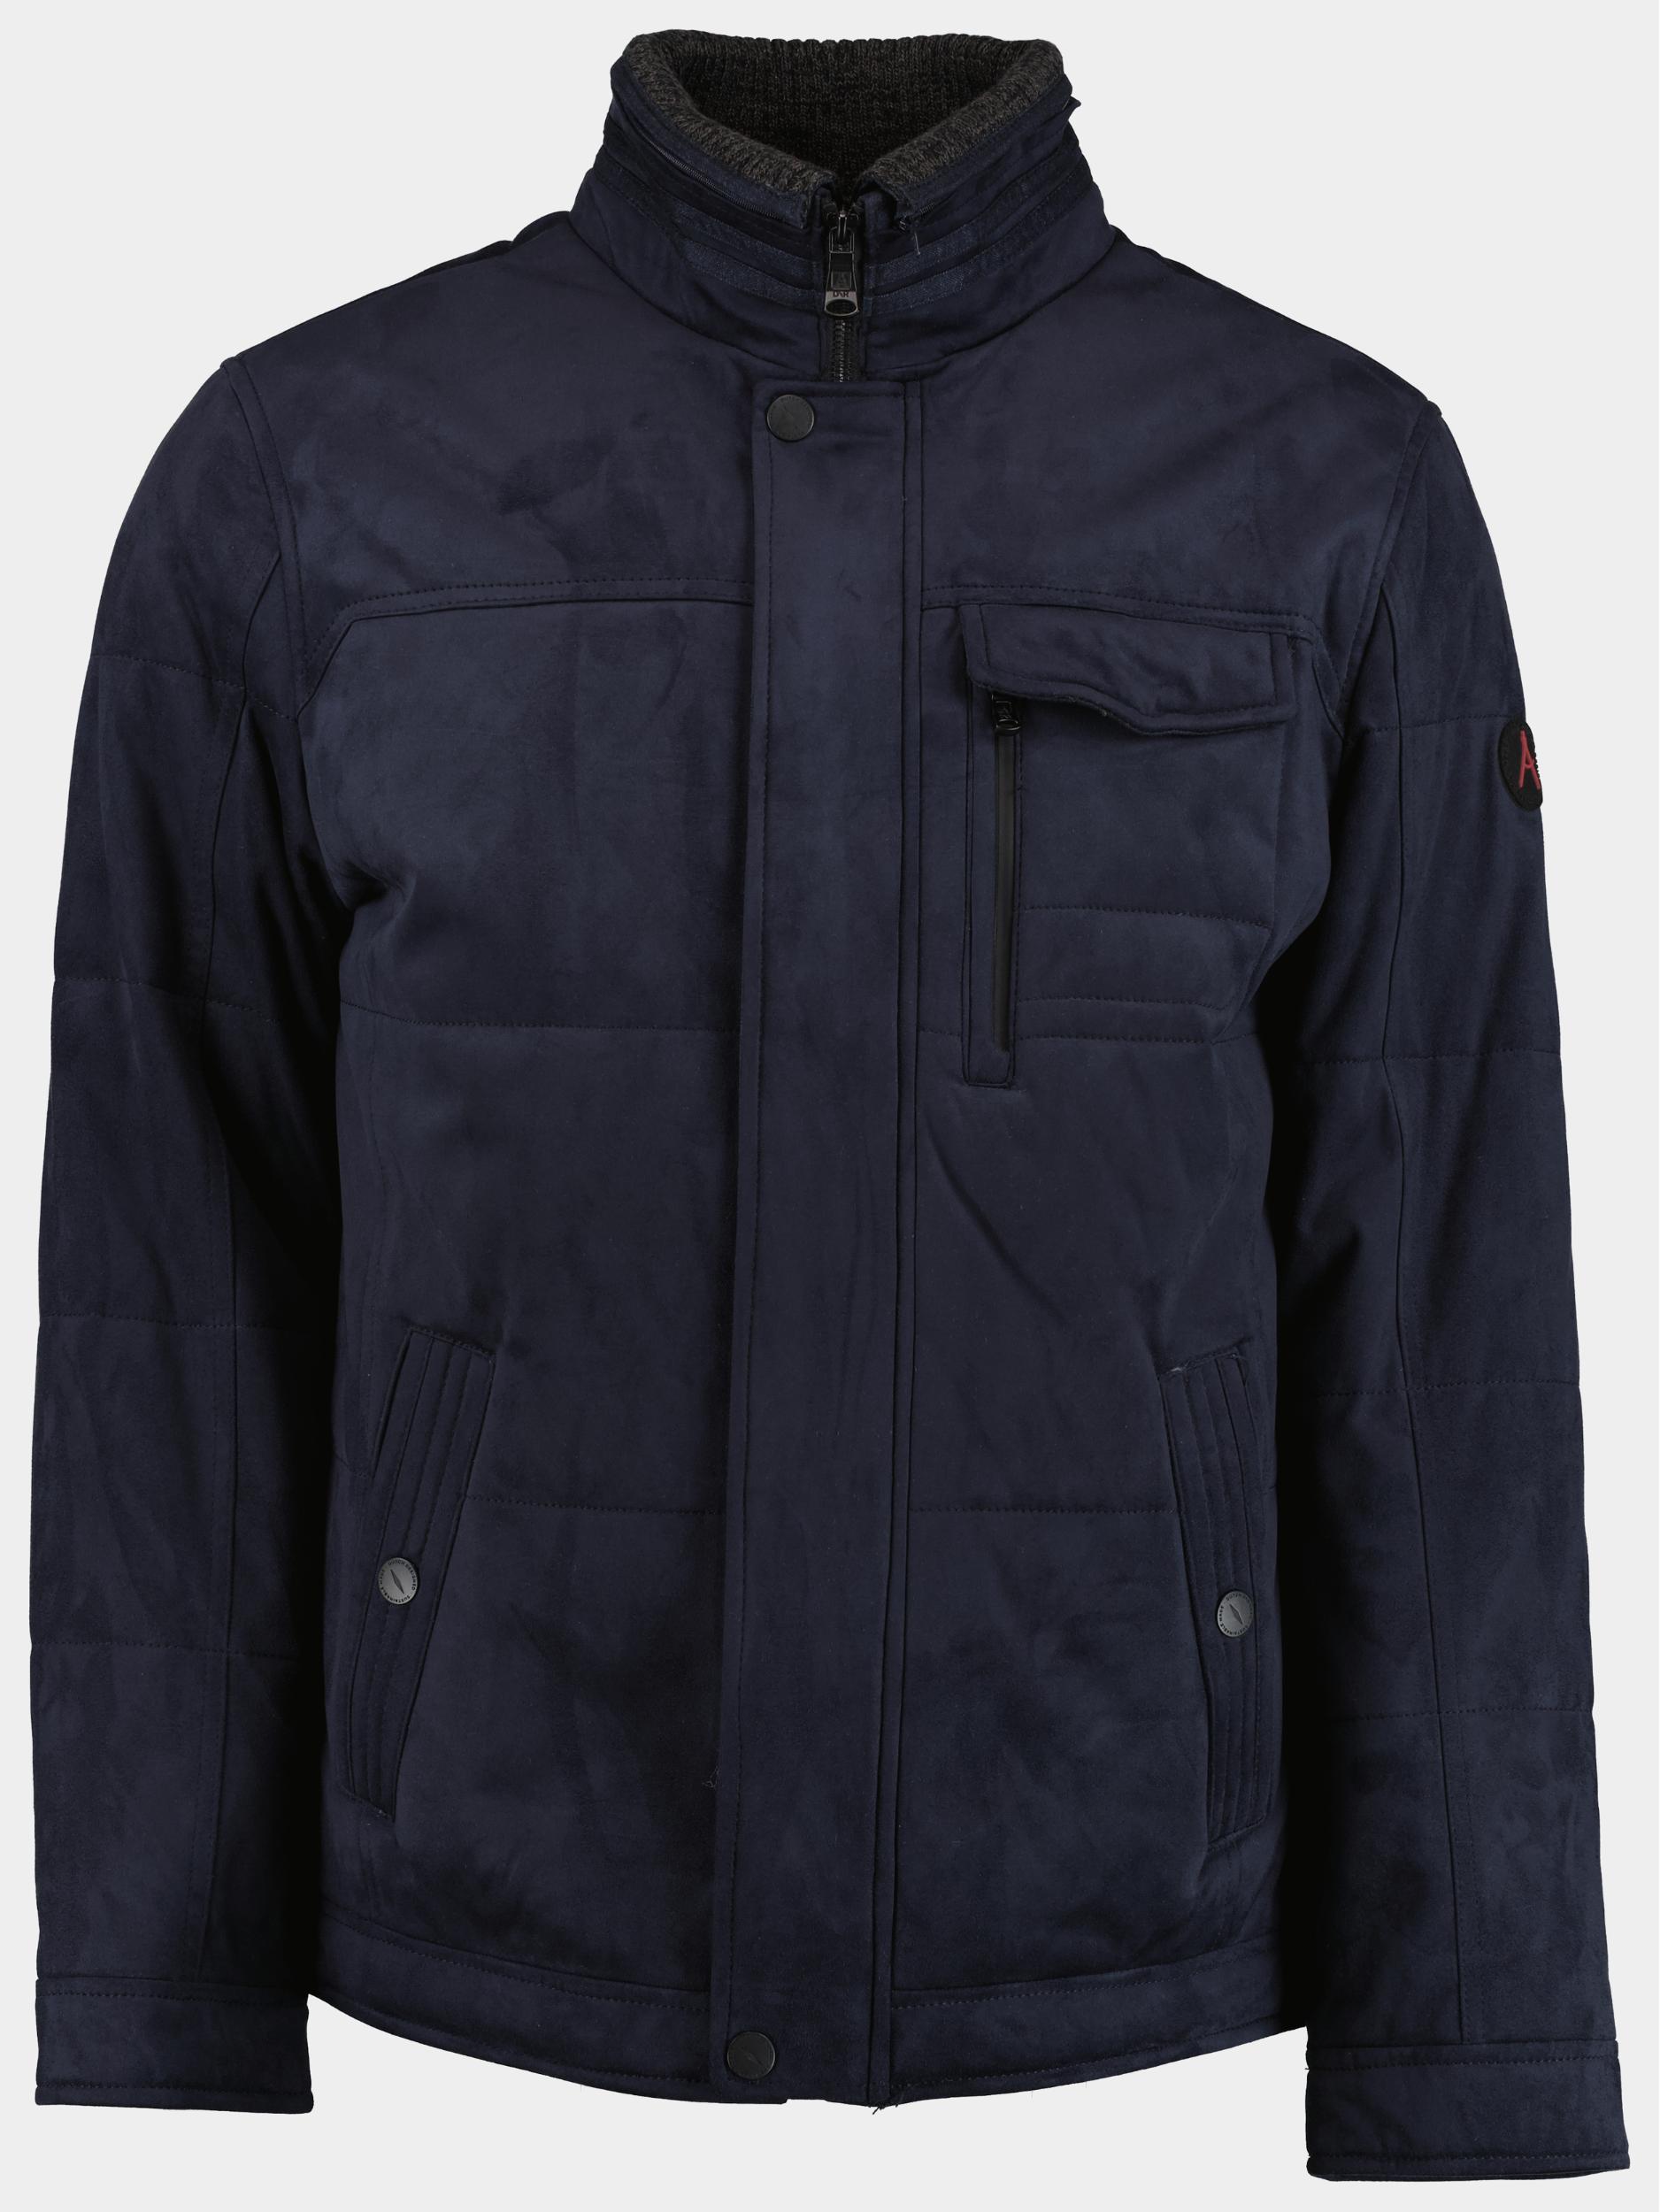 Donders 1860 Winterjack Blauw Textile jacket 21730/790